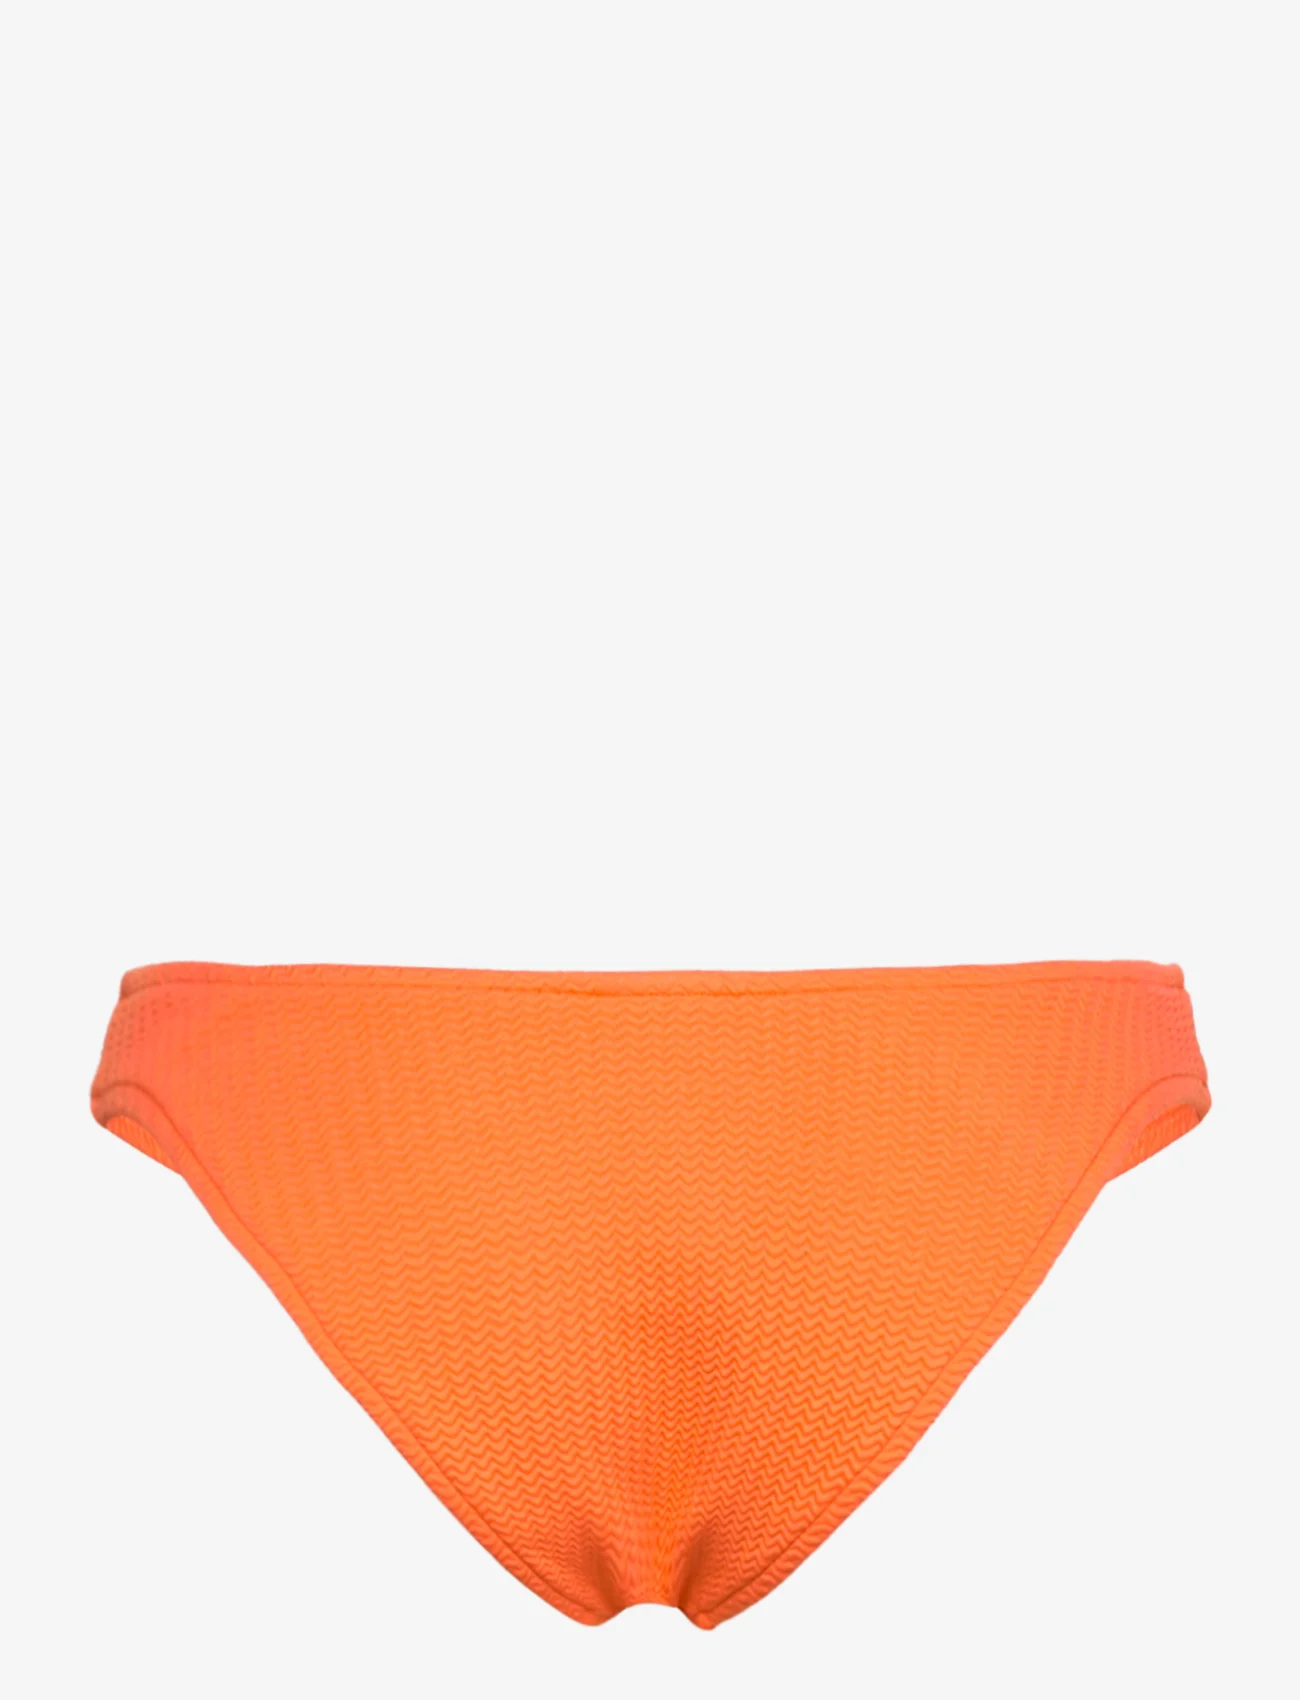 Seafolly - SeaDive High Cut Pant - bikini briefs - mandarin - 1